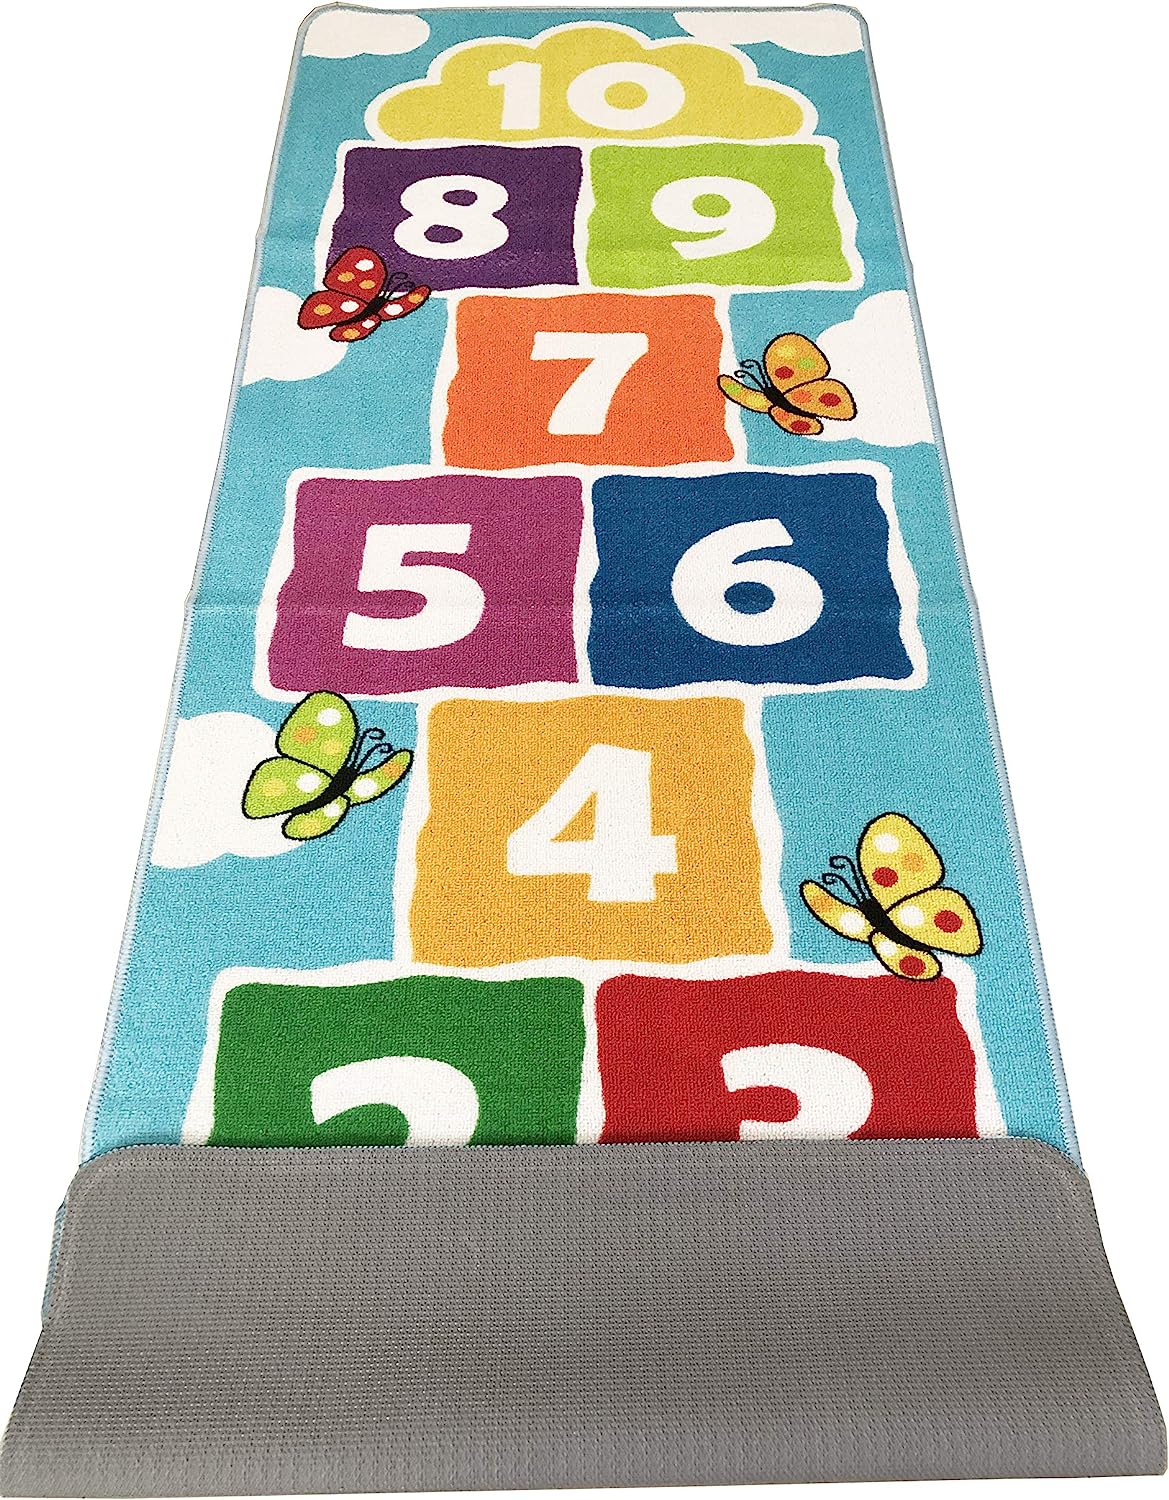 Game Runner Rug for Kids Bedroom Playroom, Children Carpet